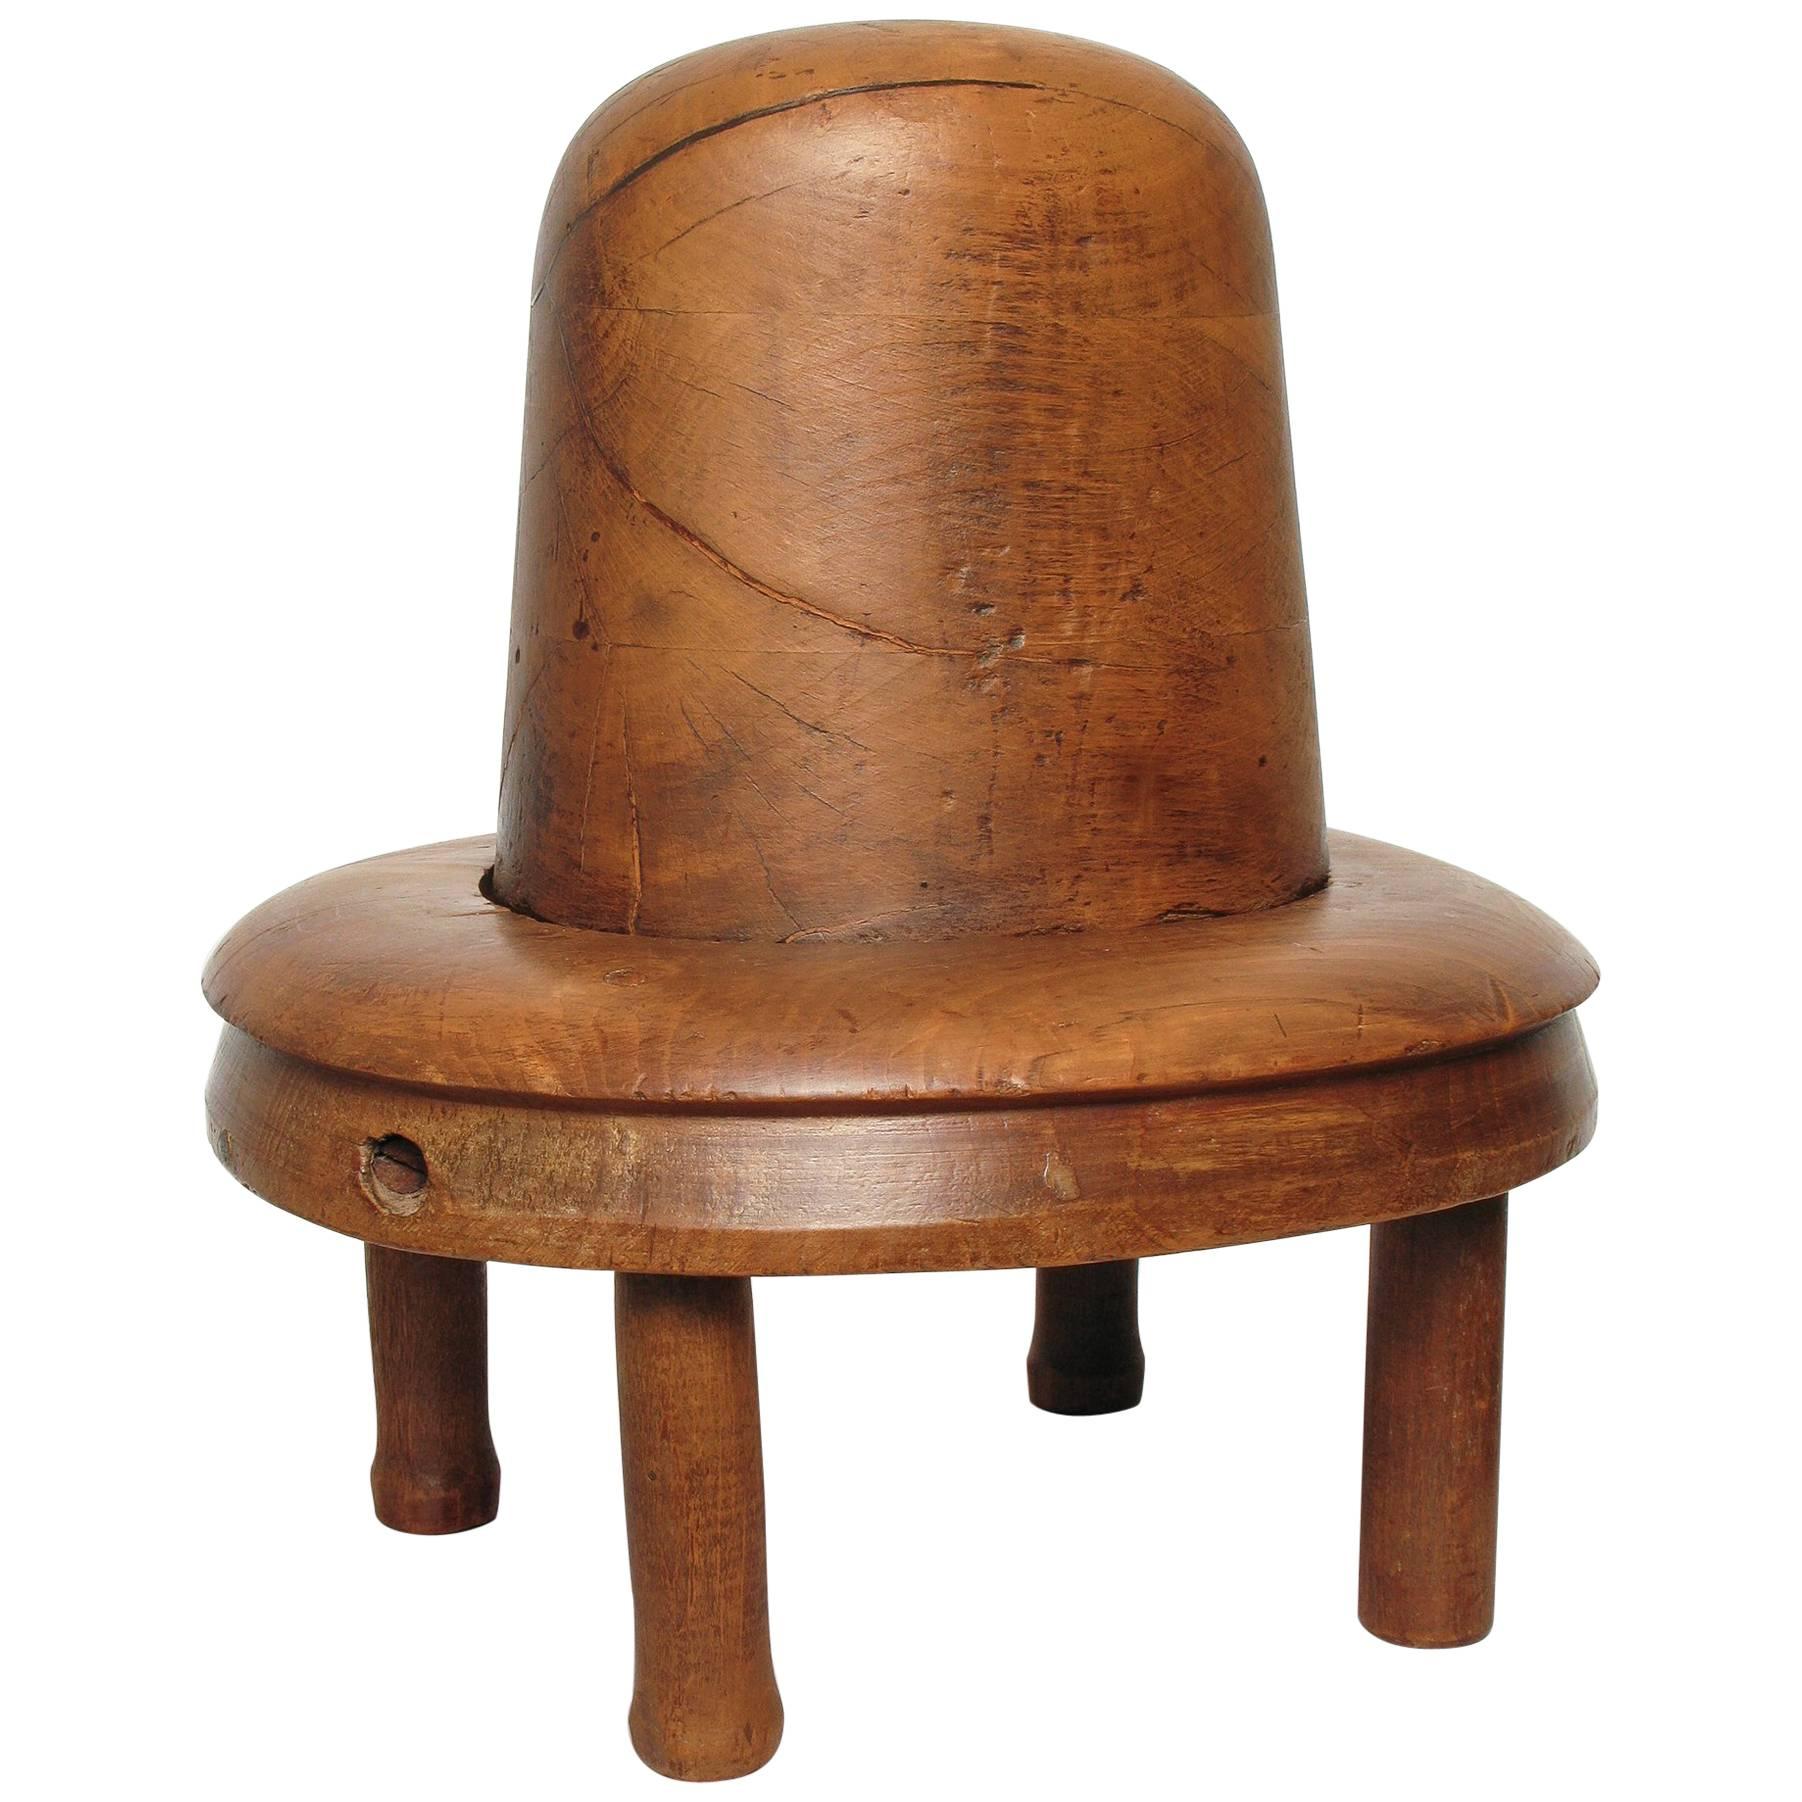 Original Borsalino Wooden Old Hat Pattern